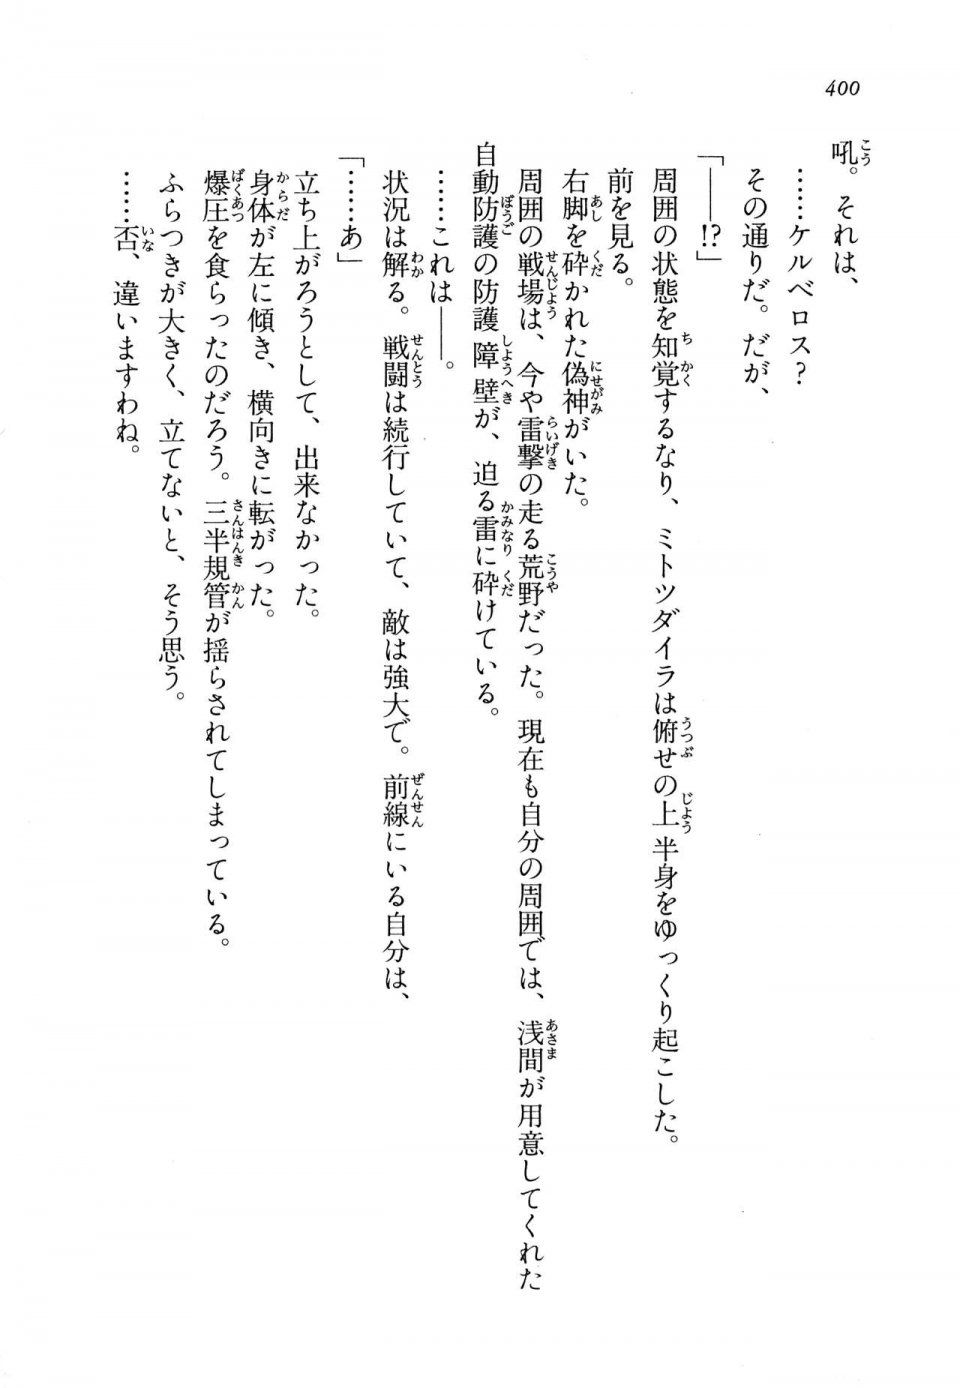 Kyoukai Senjou no Horizon BD Special Mininovel Vol 8(4B) - Photo #404